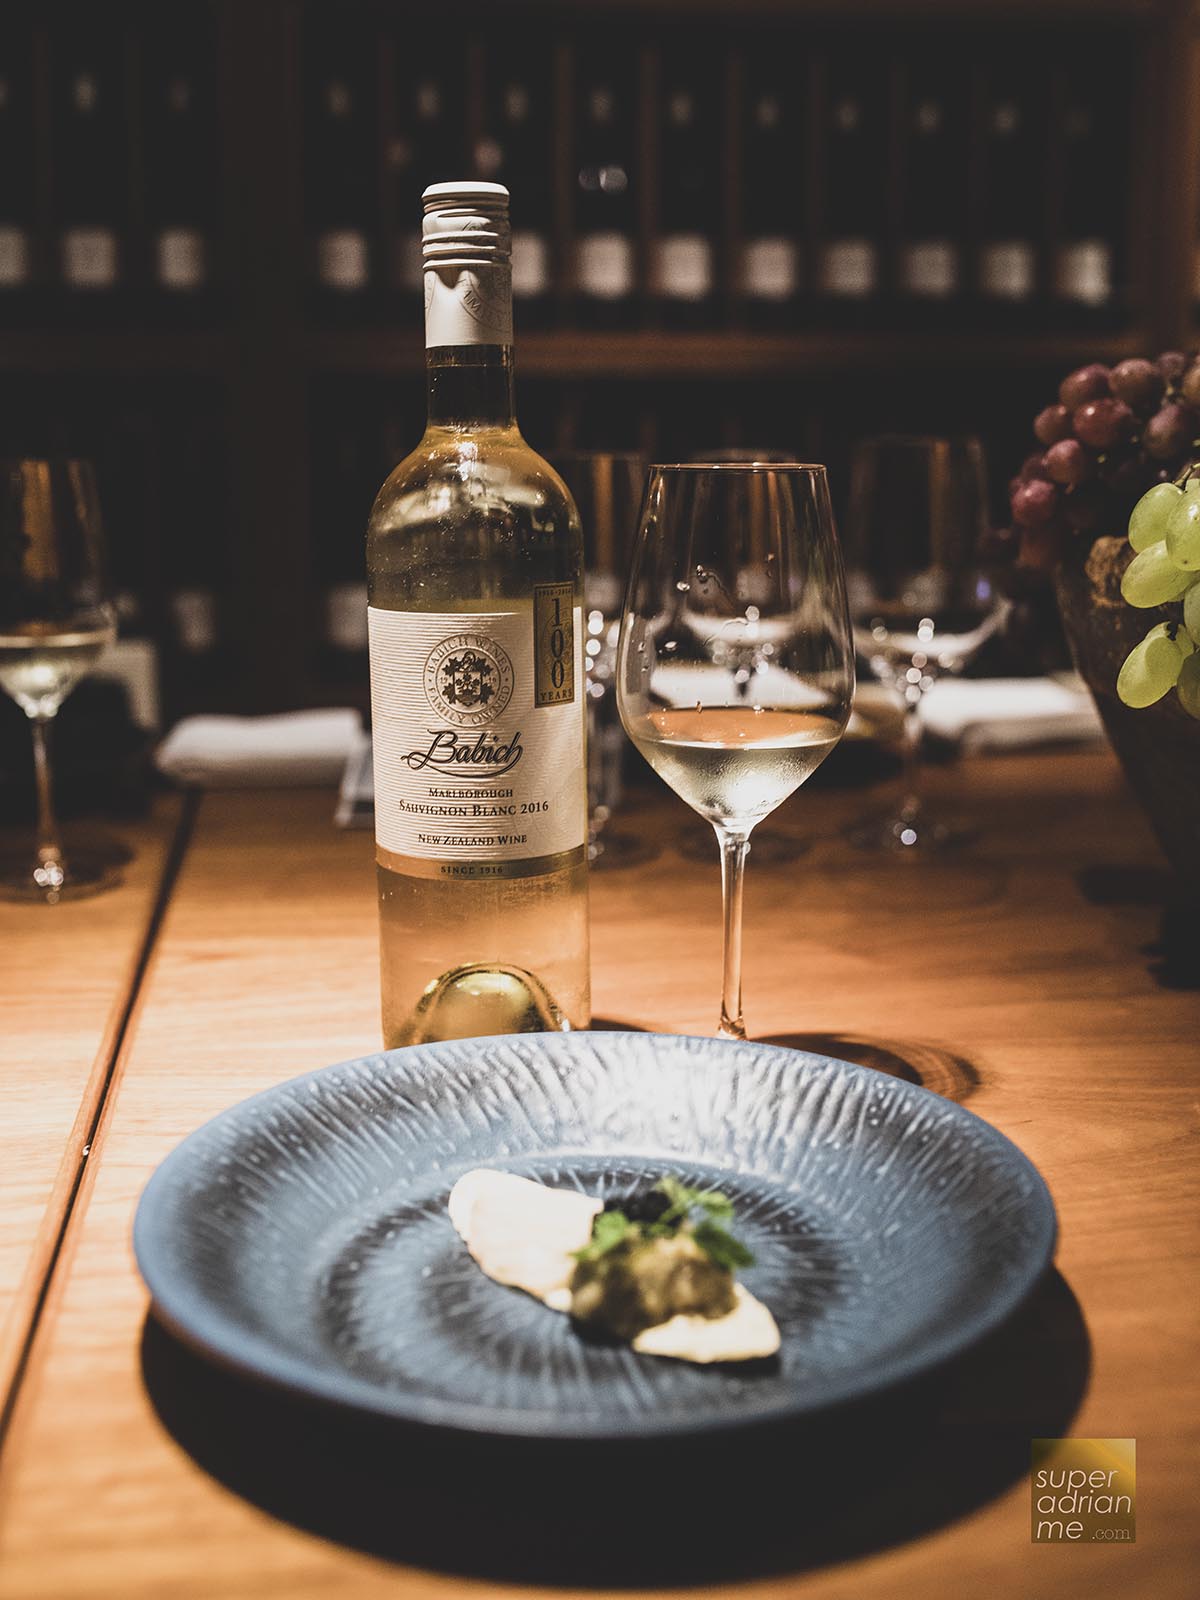 Babich Marlborough Sauvignon Blanc 2016 paired with yellowtail kingfish, cahrred eggplant, caviar and marsala cracker